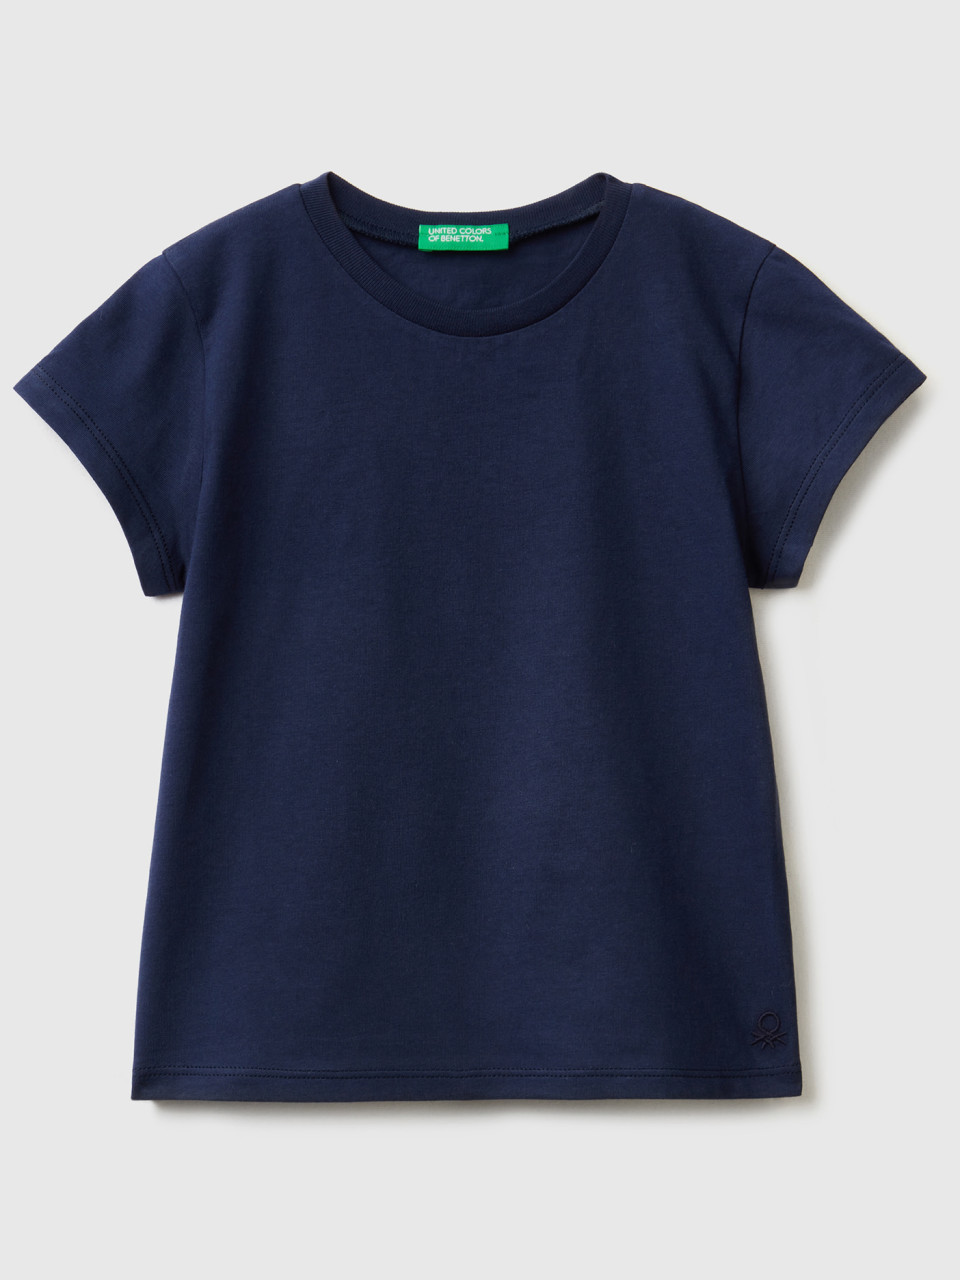 Benetton, 100% Organic Cotton T-shirt, Dark Blue, Kids